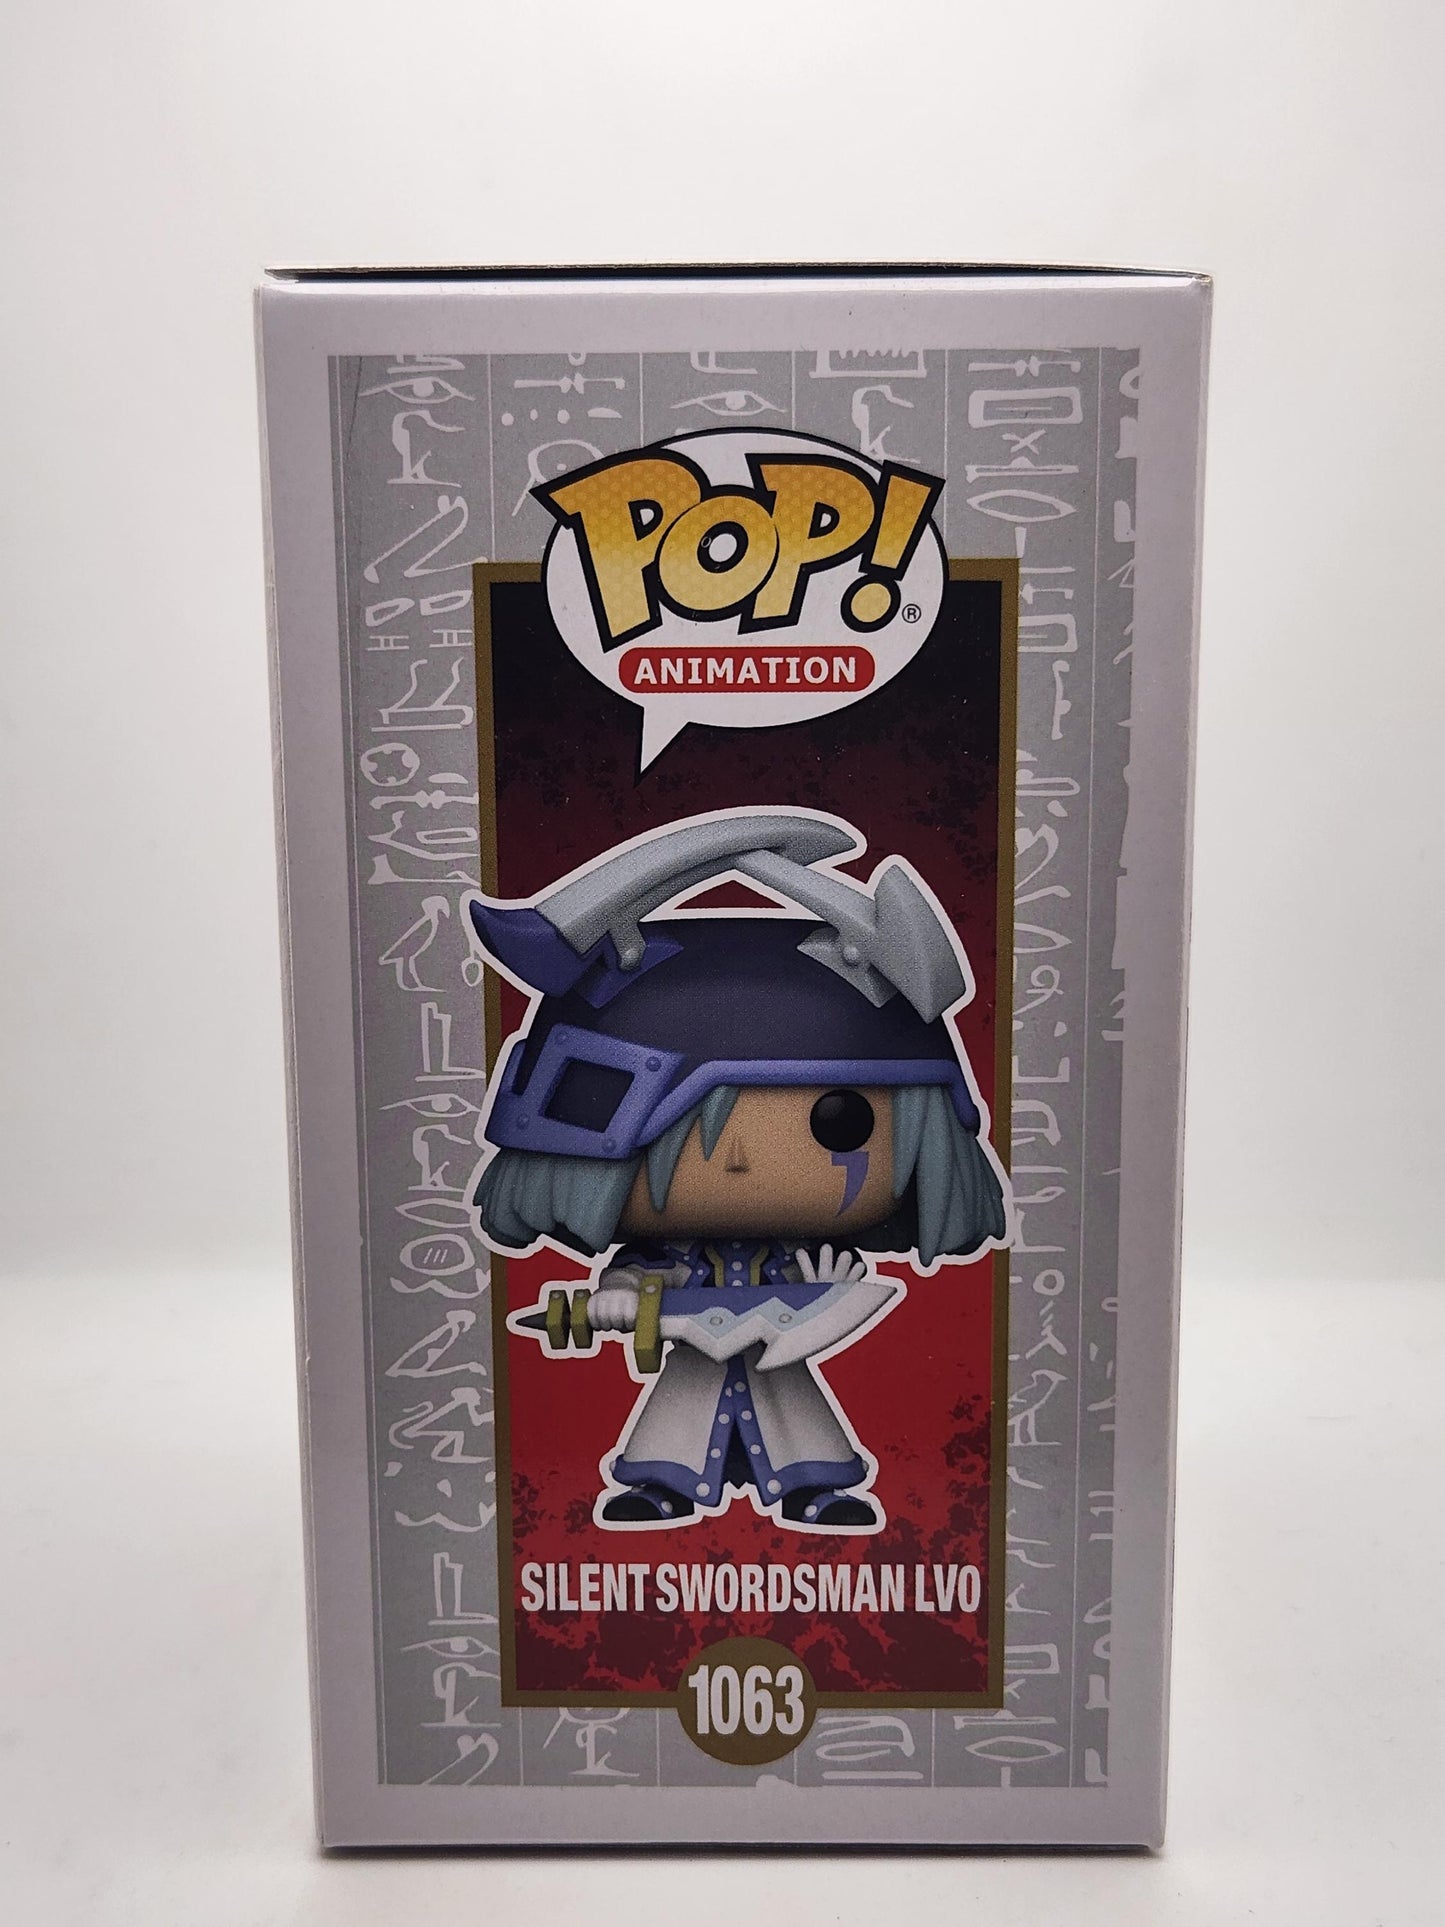 Silent Swordsman LVO - #1063 - Box Condition 9/10